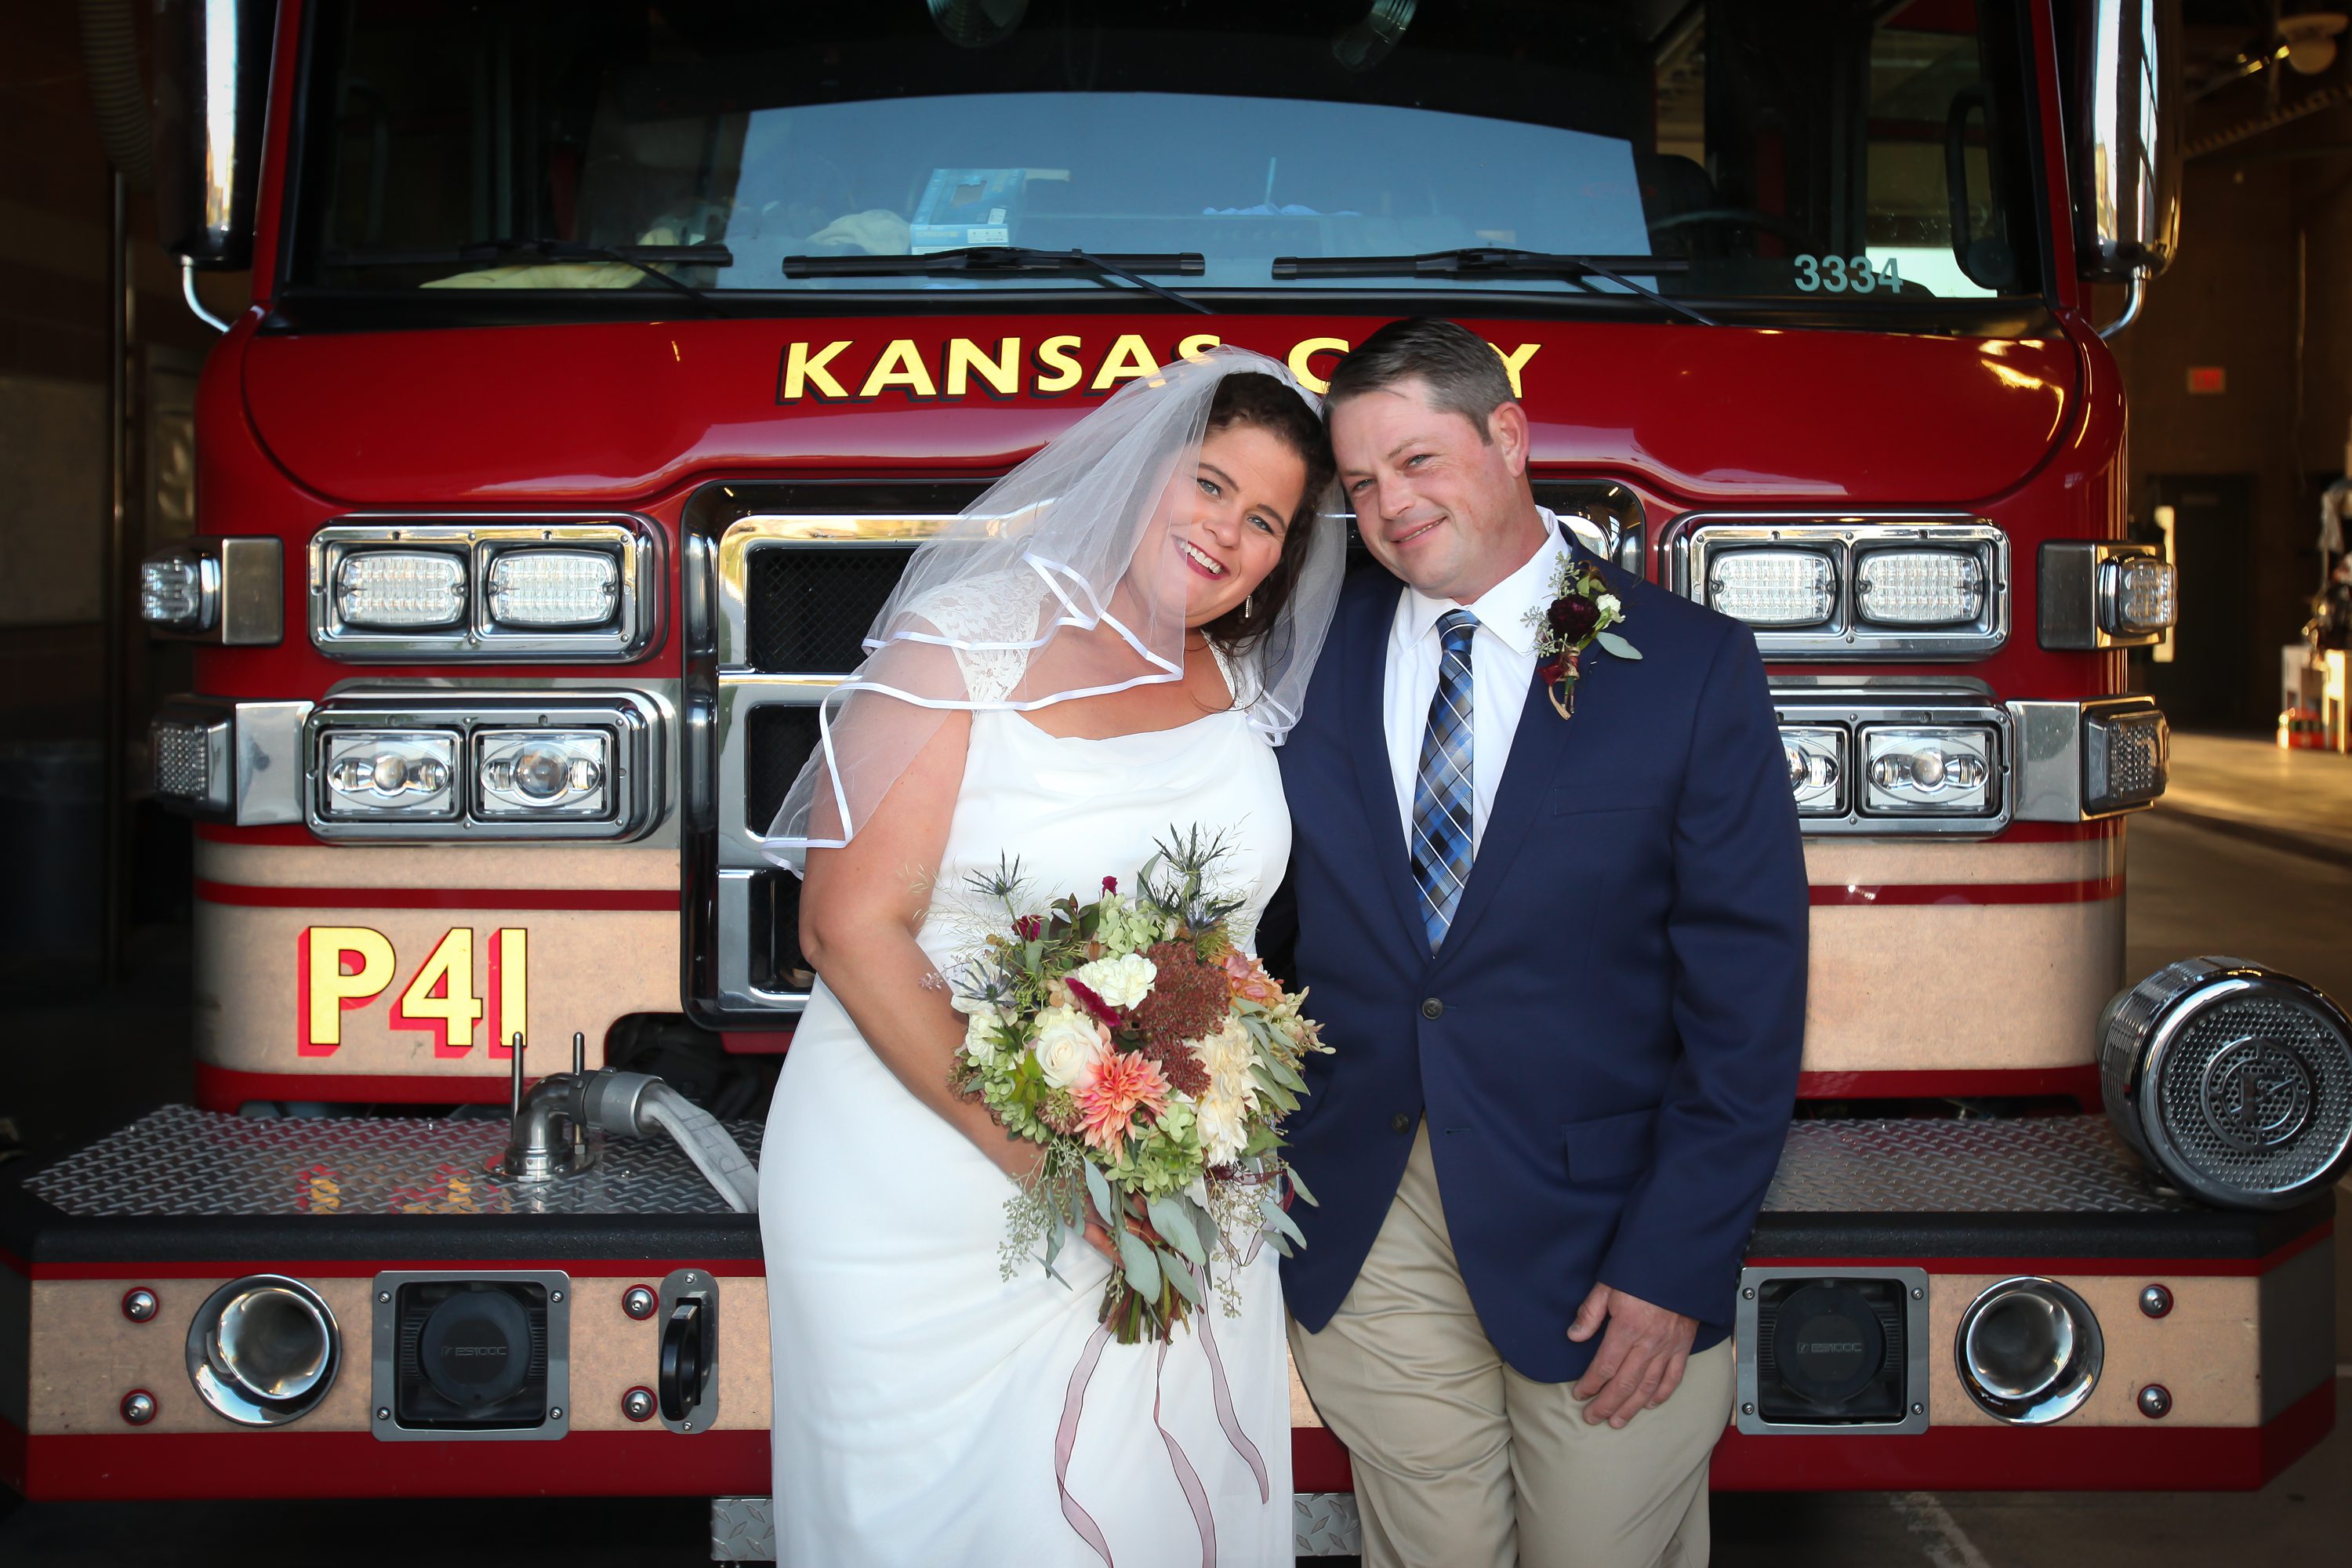 Kansas City Missouri,firefighter wedding